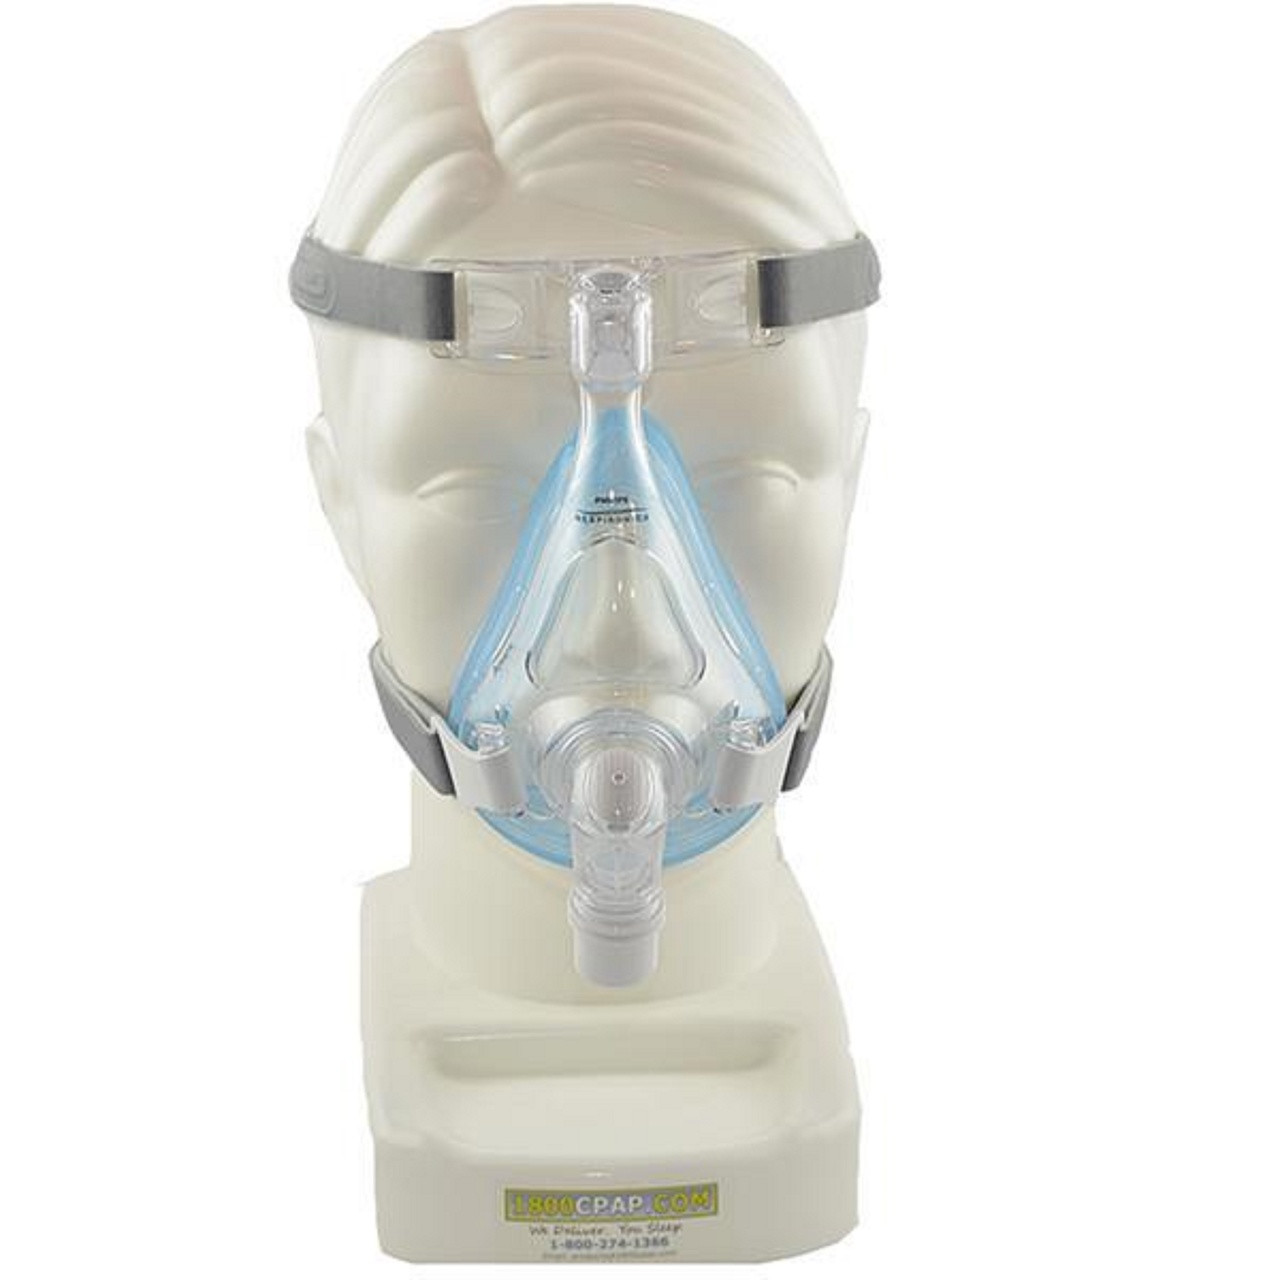 Respironics Cpap Mask Parts